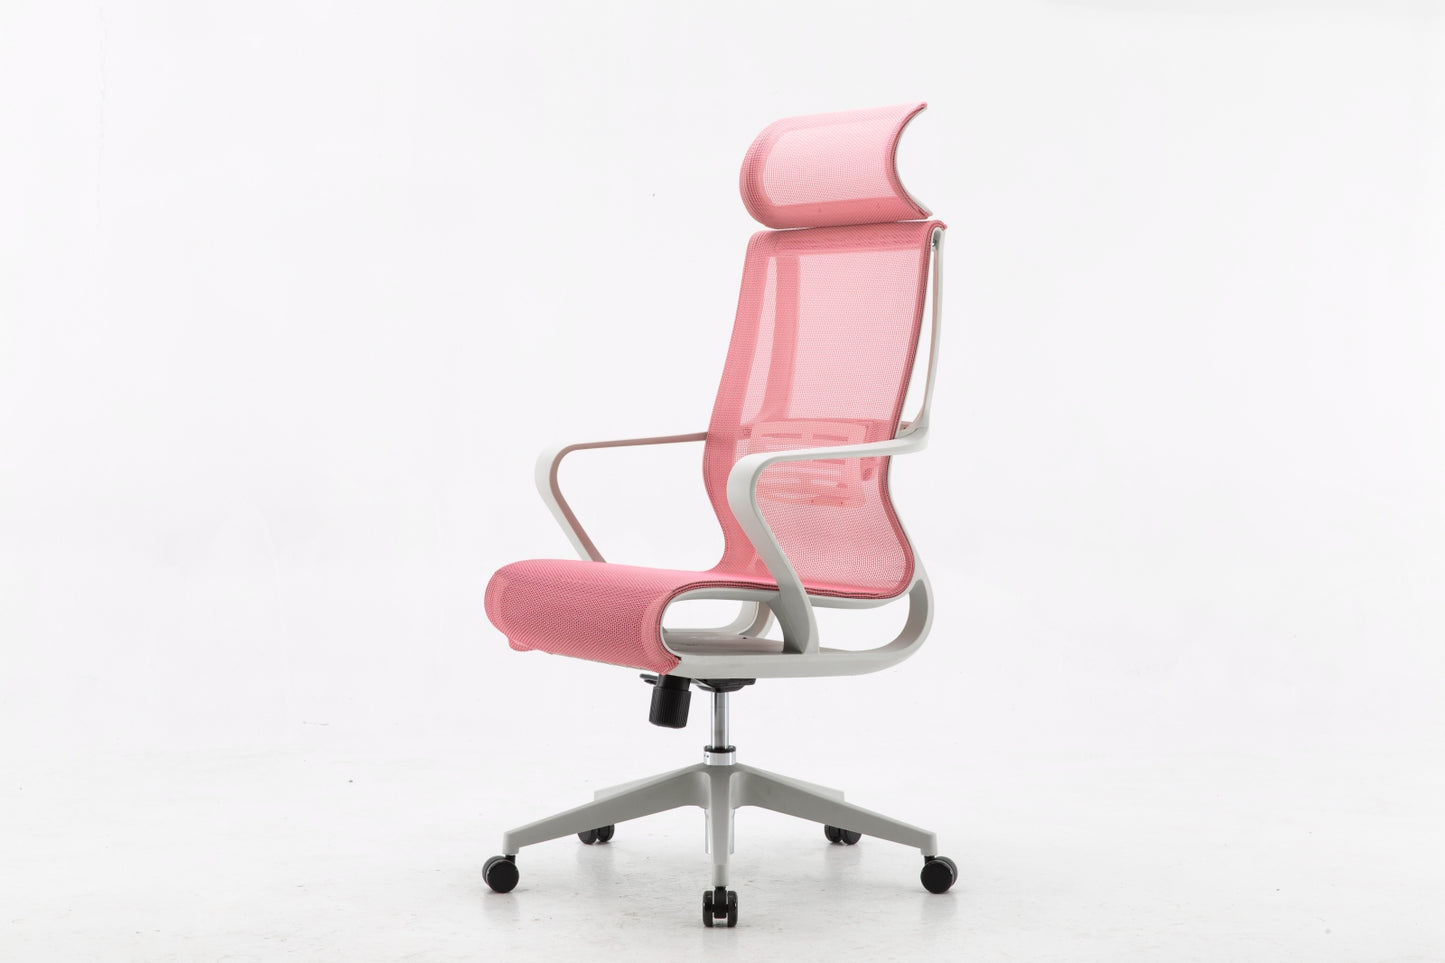 Sihoo M60 Ergonomic Chair (Pink)